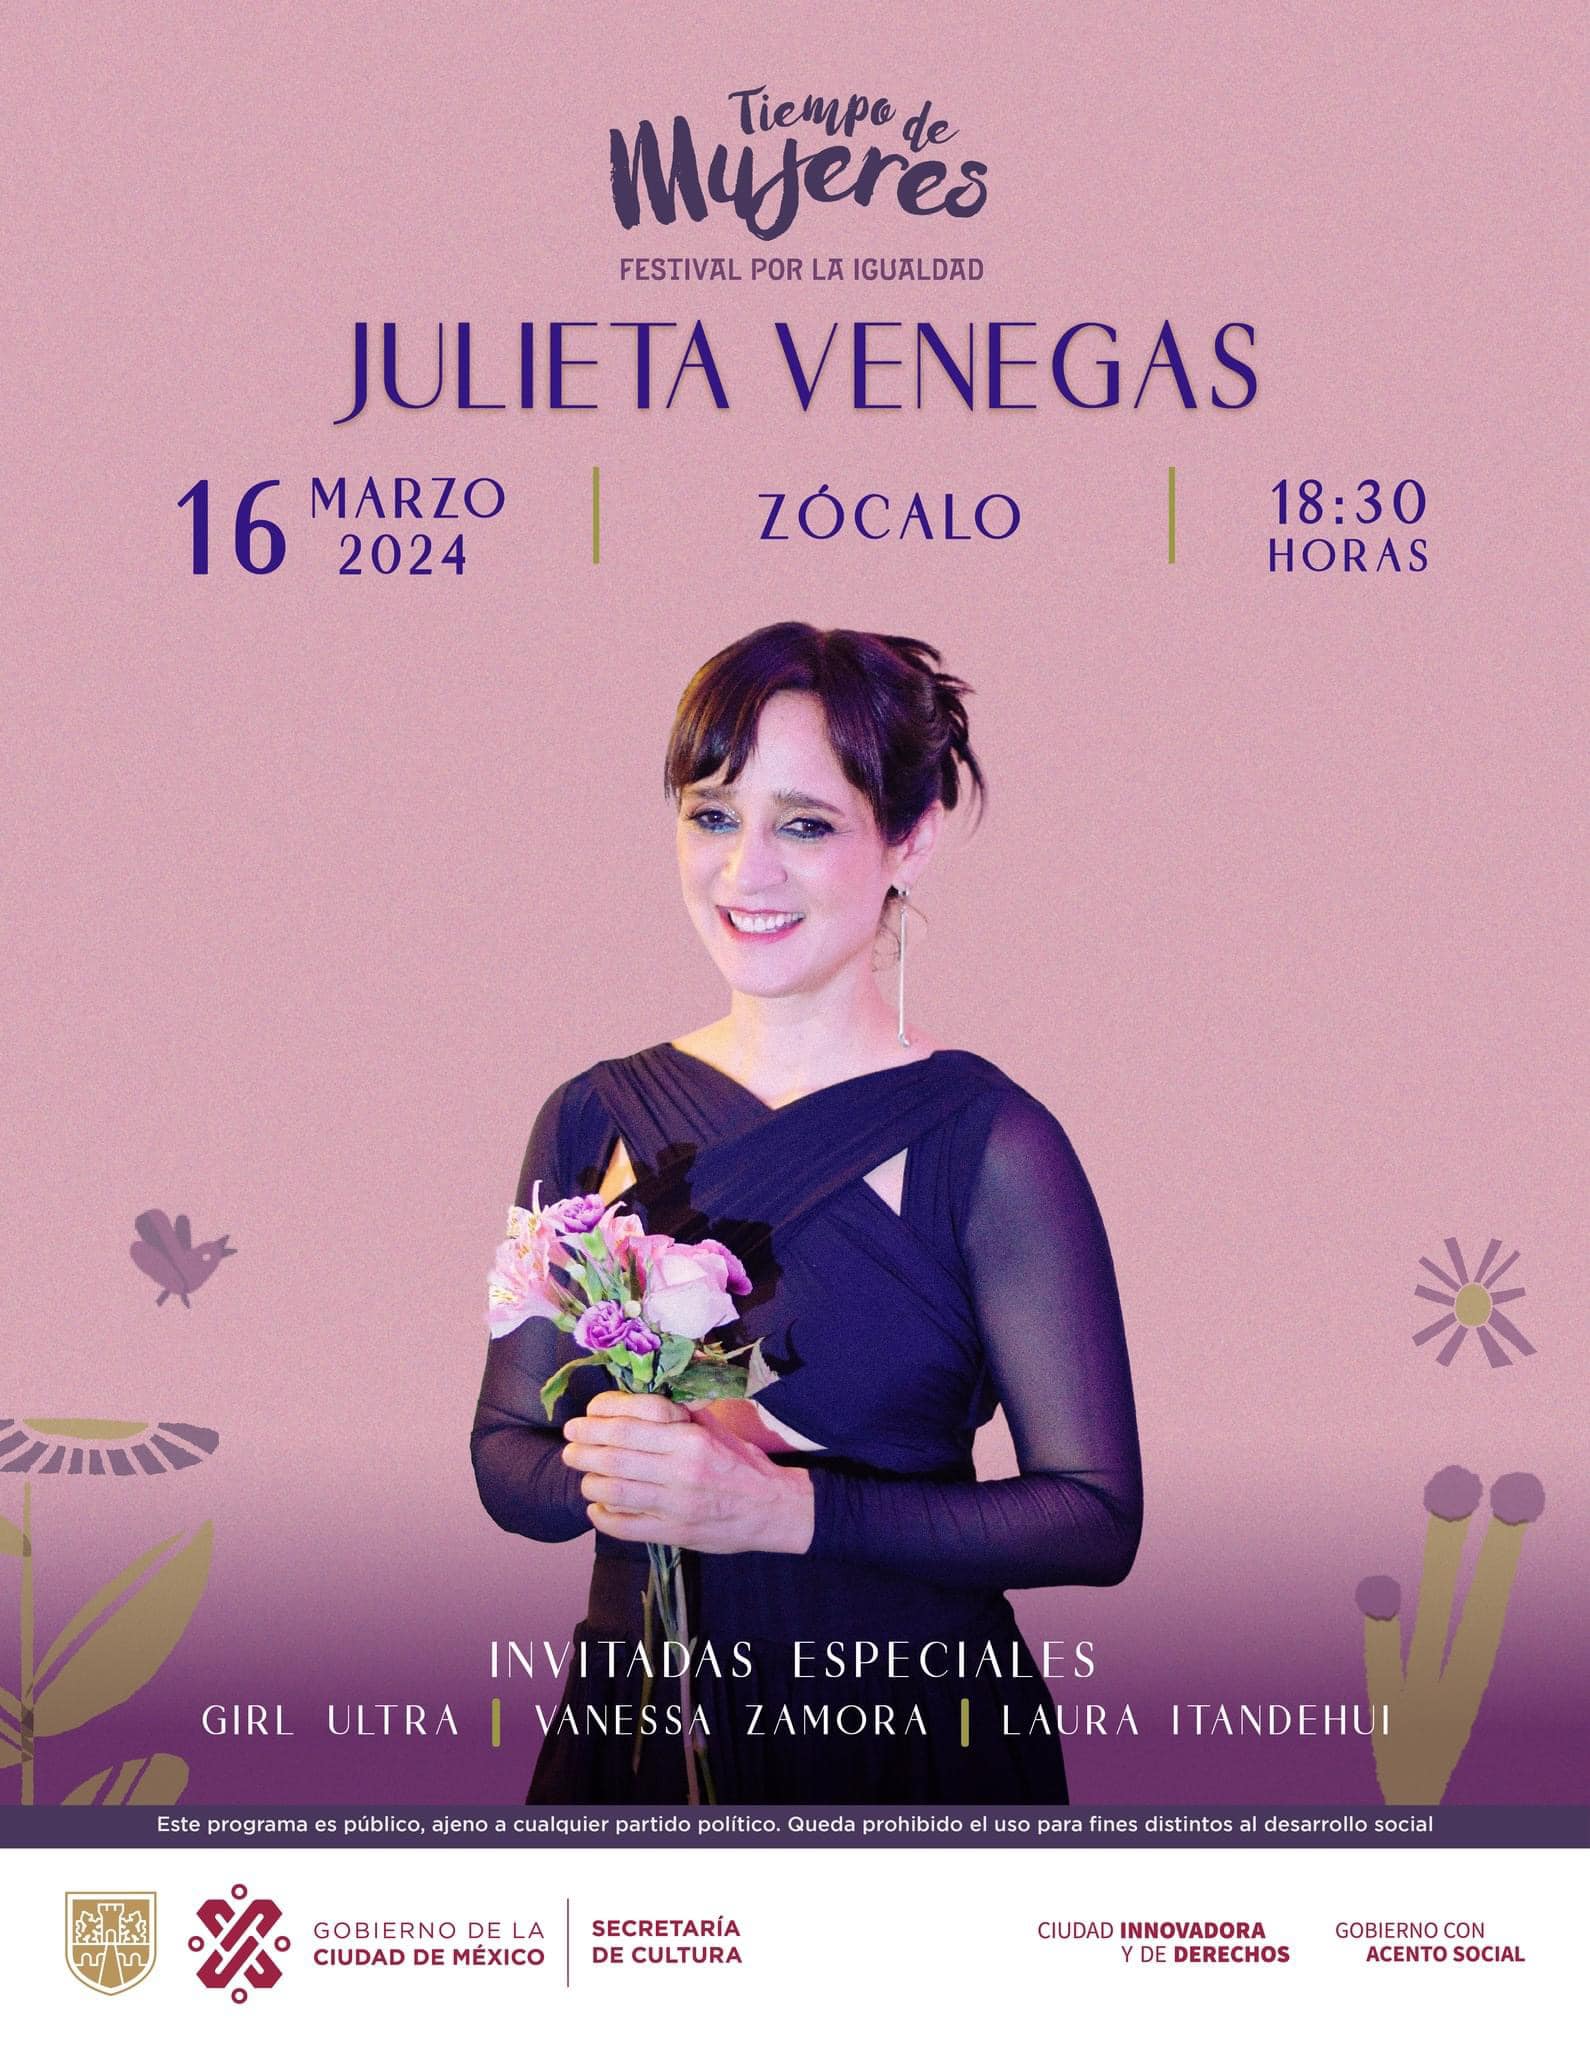 Julieta Venegas Zocalo